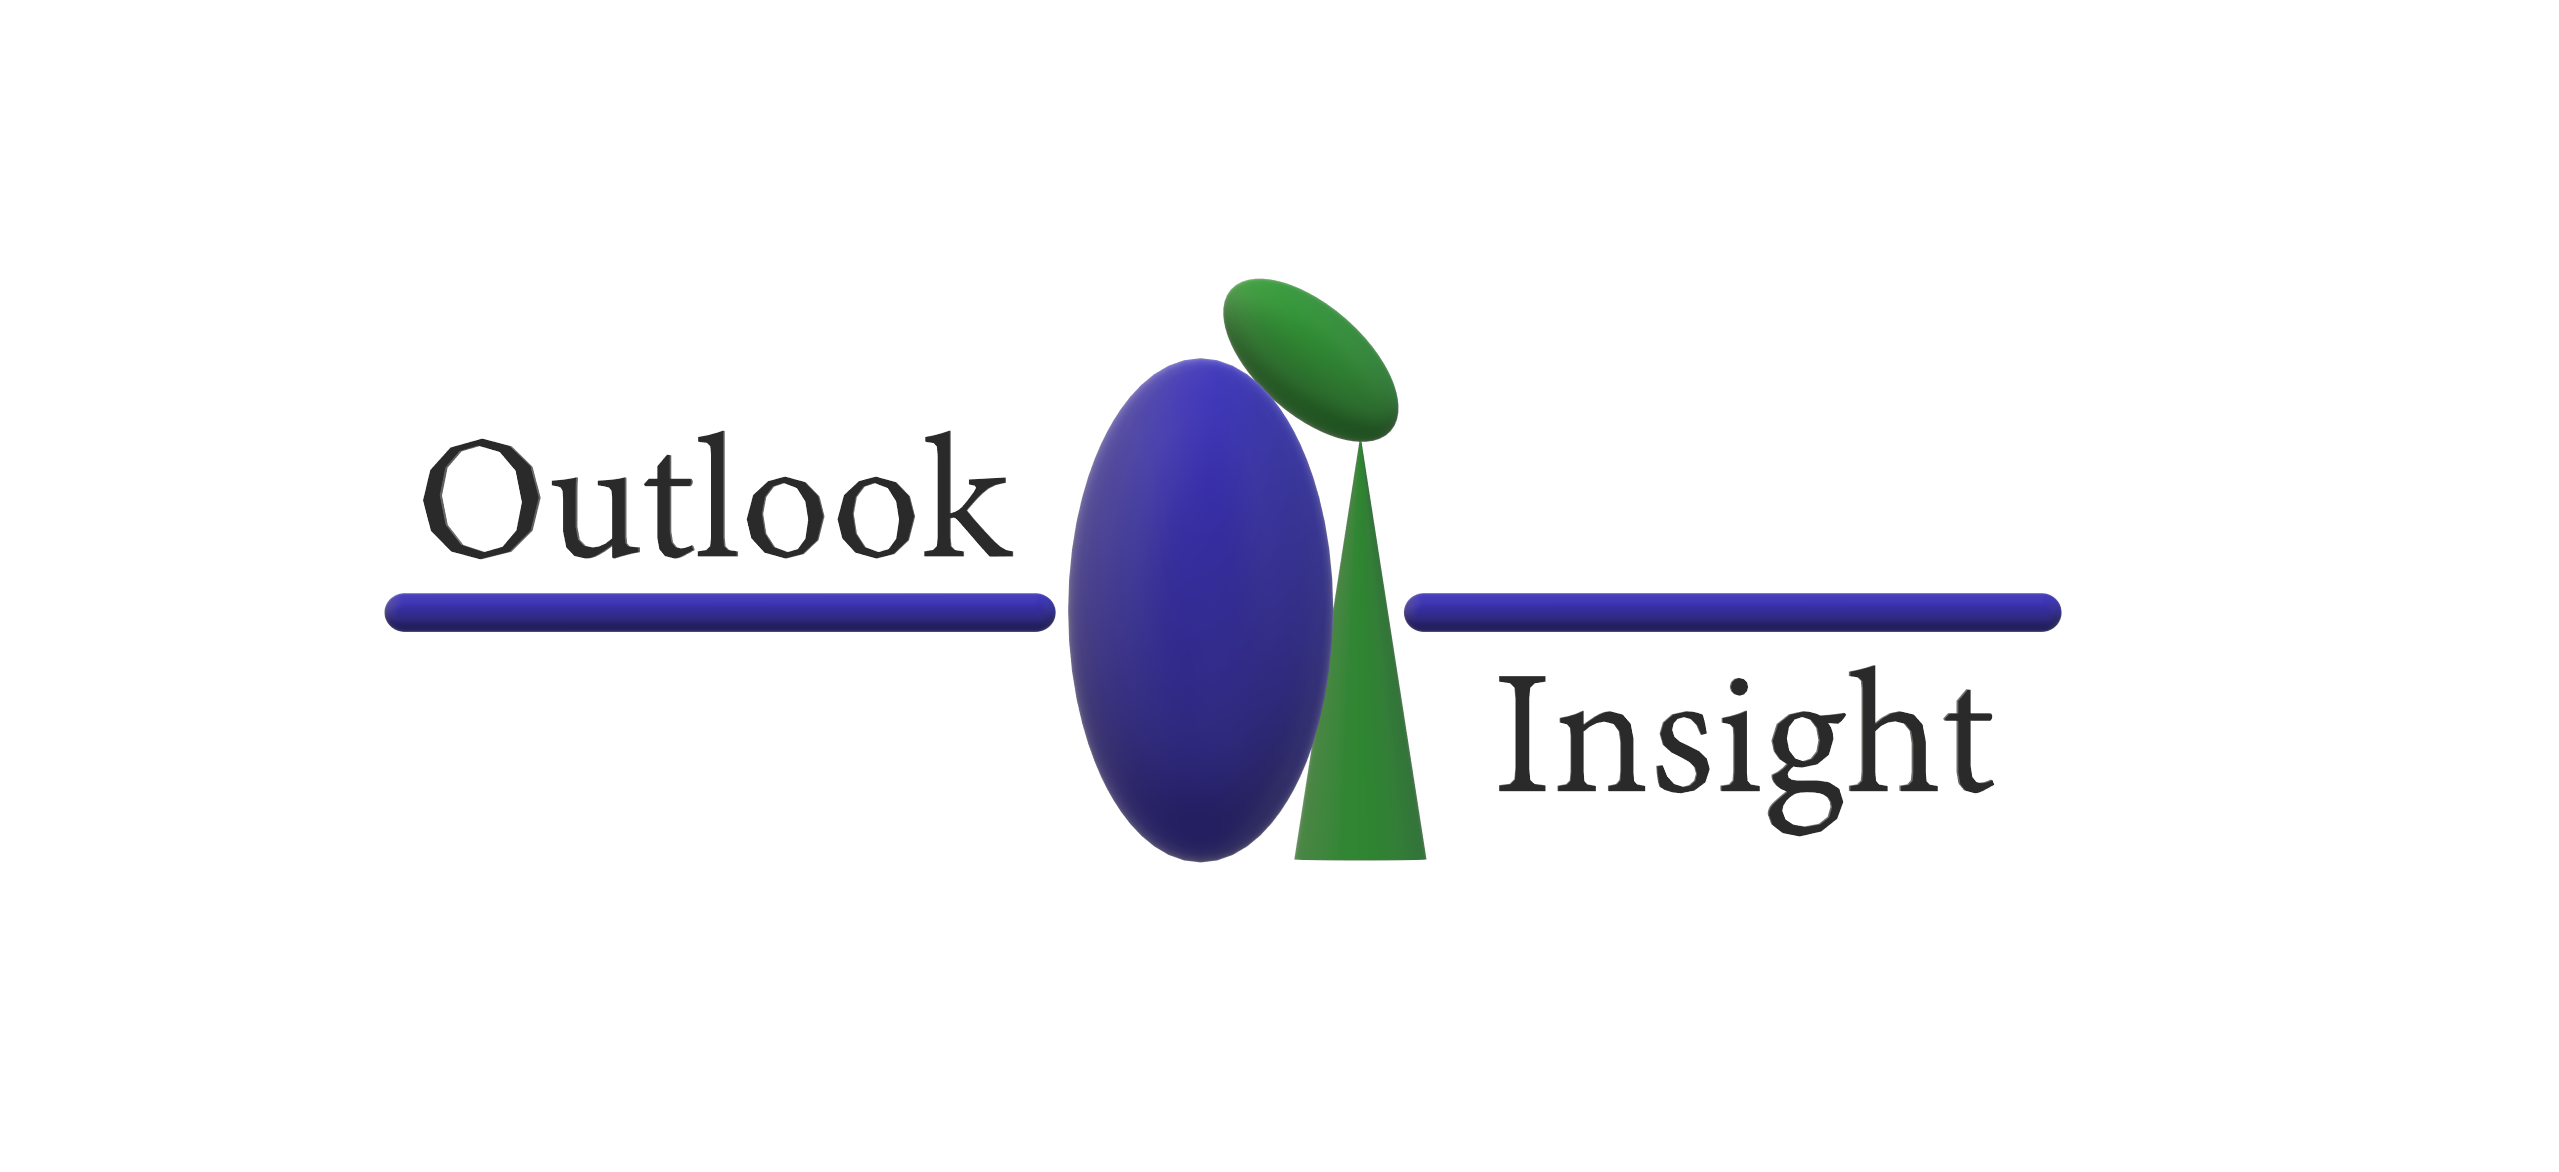 Outlook Insight logo